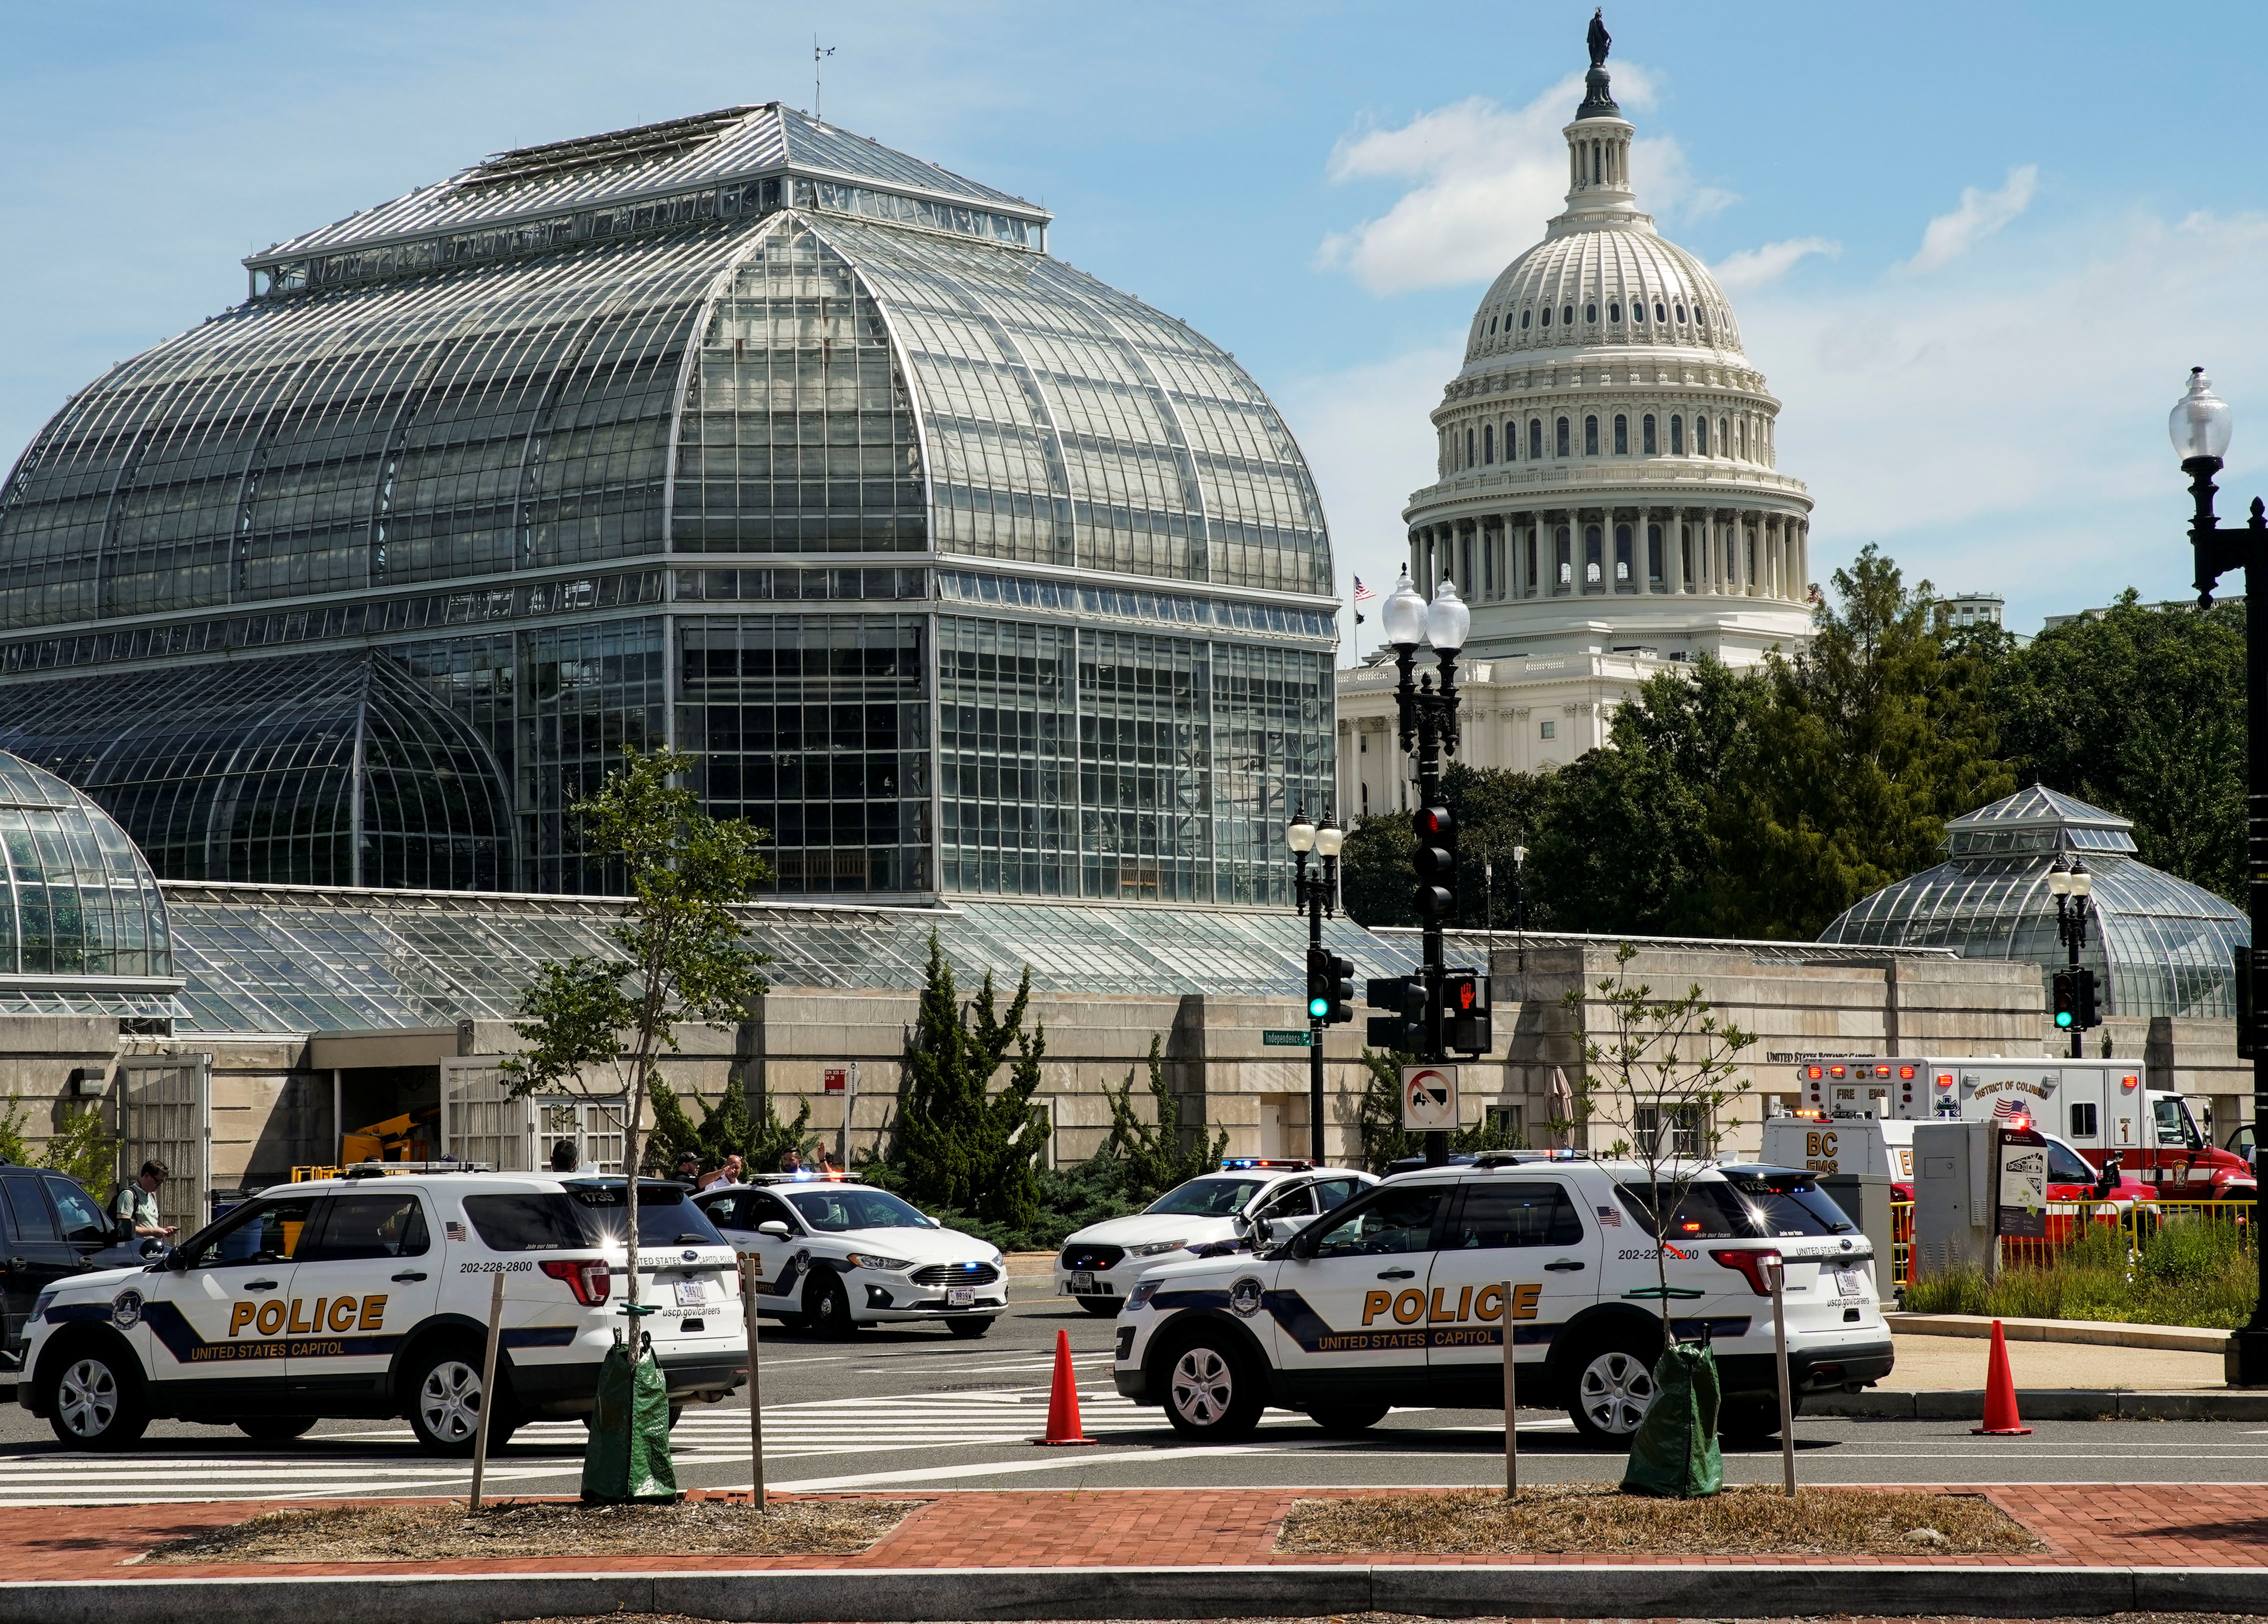 U.S. Capitol Police respond to suspicious vehicle in Washington